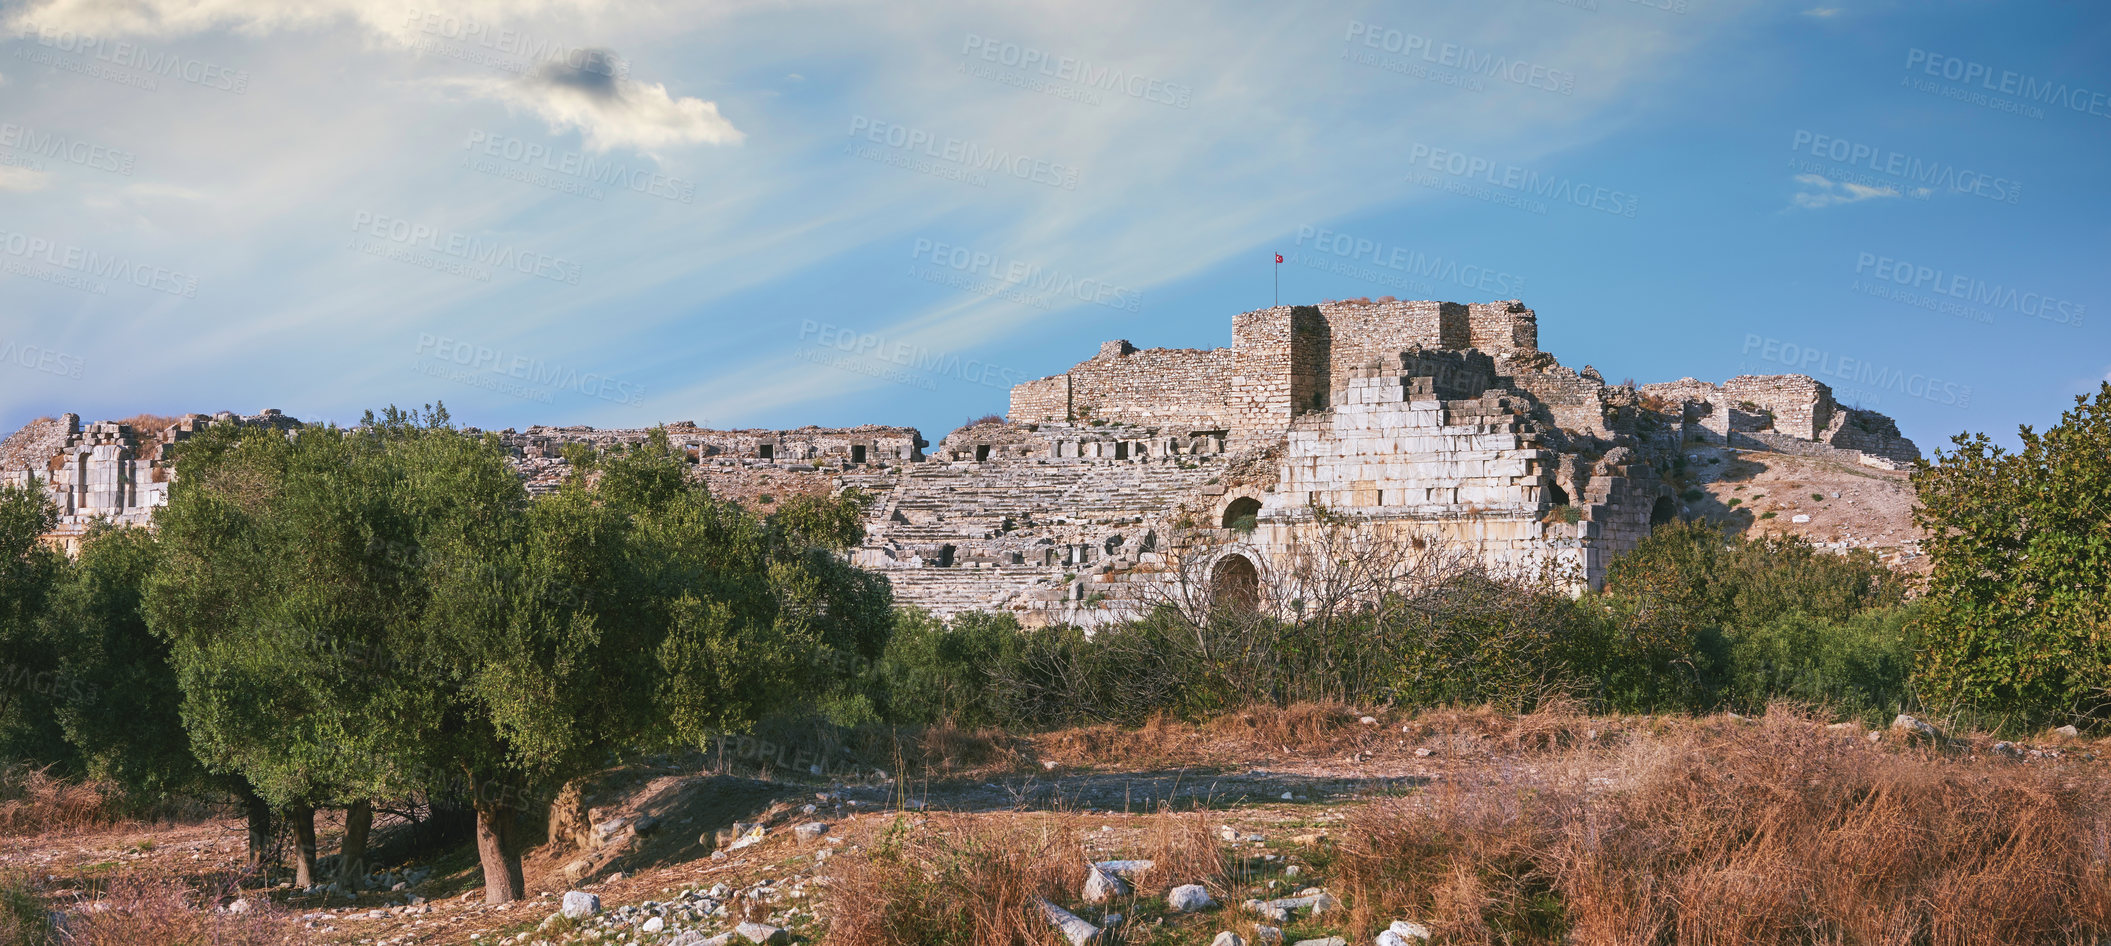 Buy stock photo Shot of ancient Roman ruins in Turkey